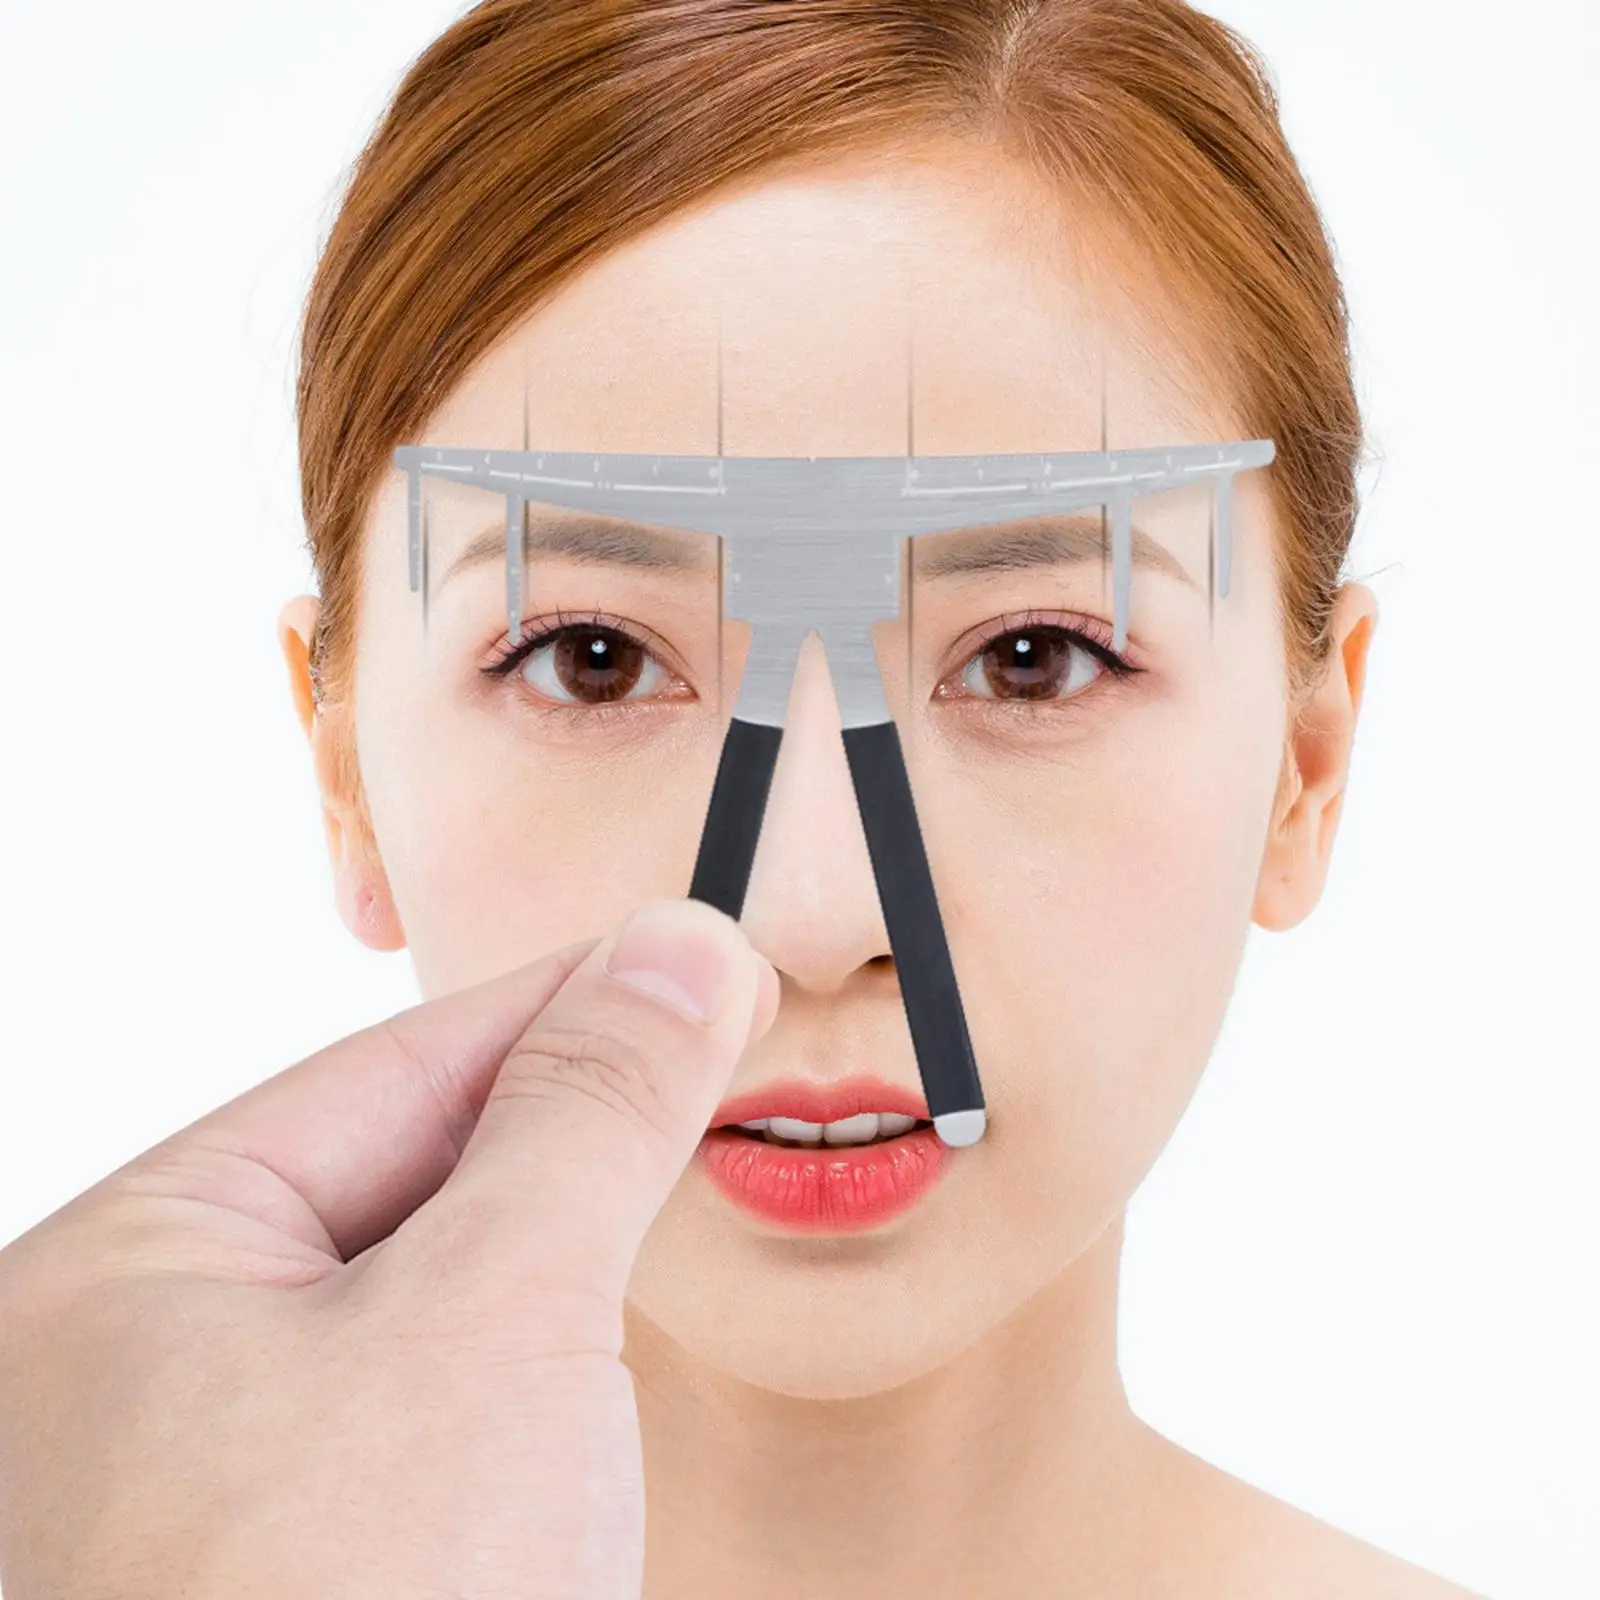 Eyebrow Ruler,  Positioning Ruler Shape Stencil Makeup Tool Eyebrow Measure Balance Extension Ruler  Tool for 